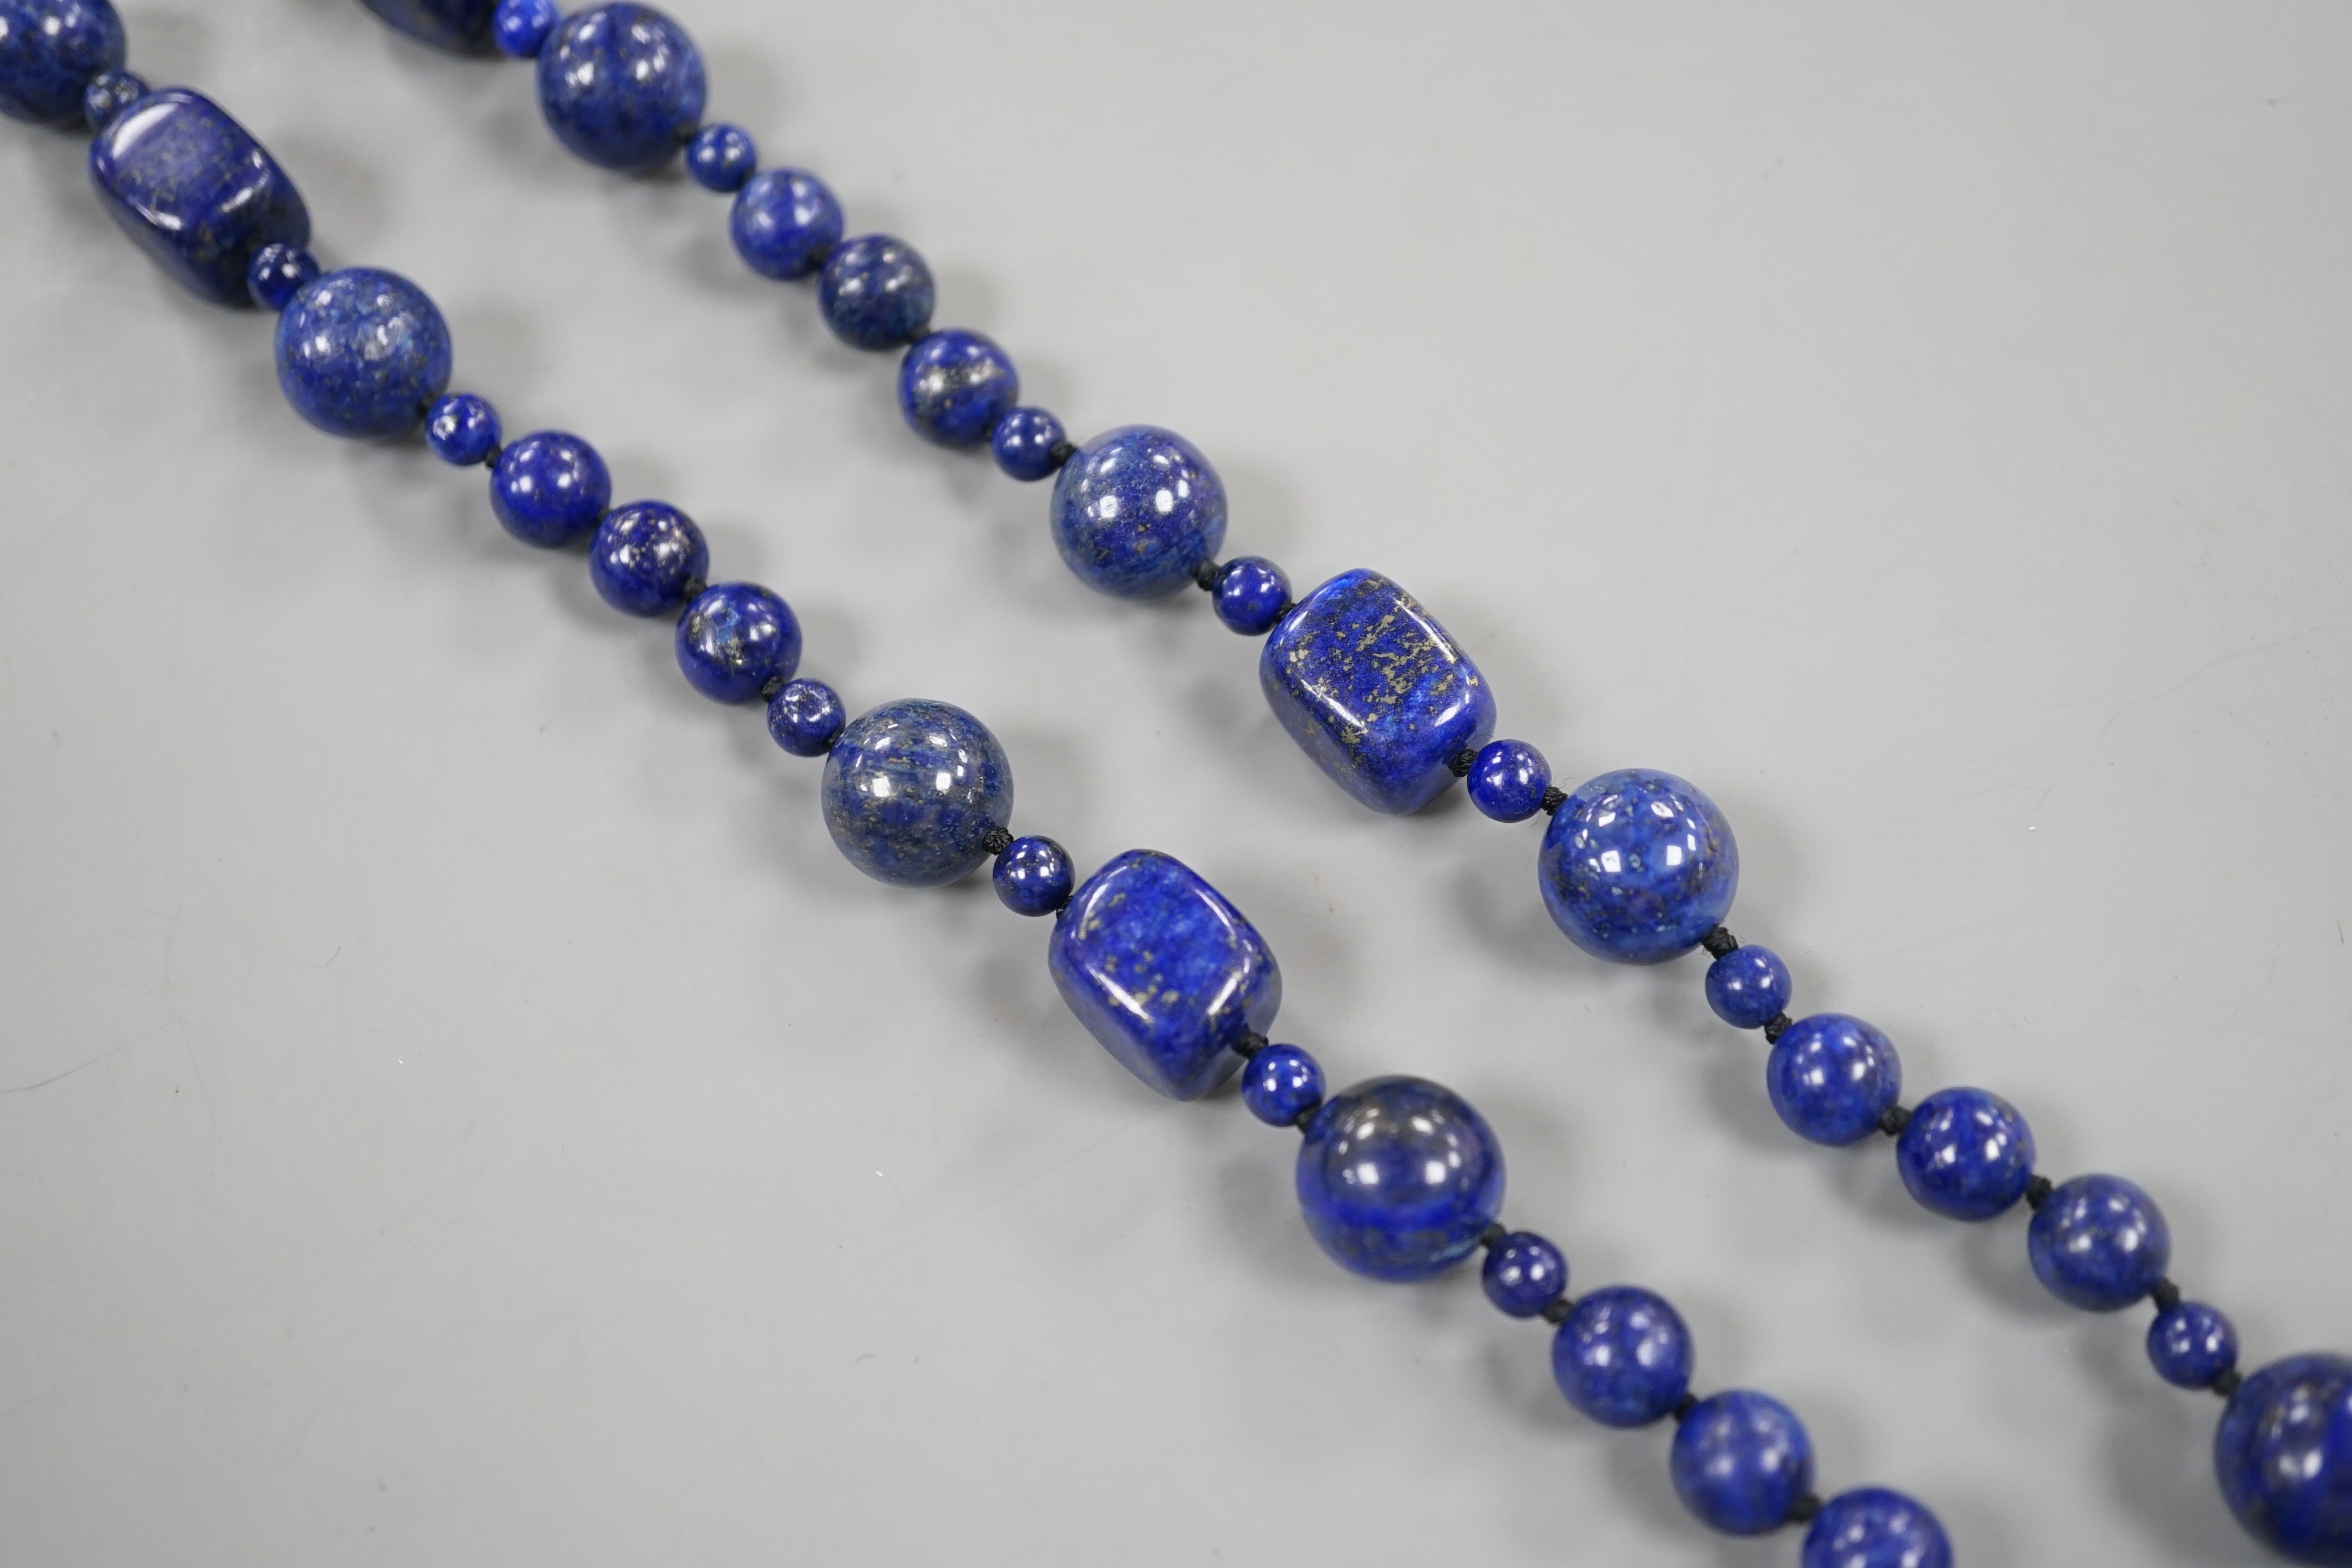 A single strand lapis lazuli round and barrel bead necklace, 72cm.